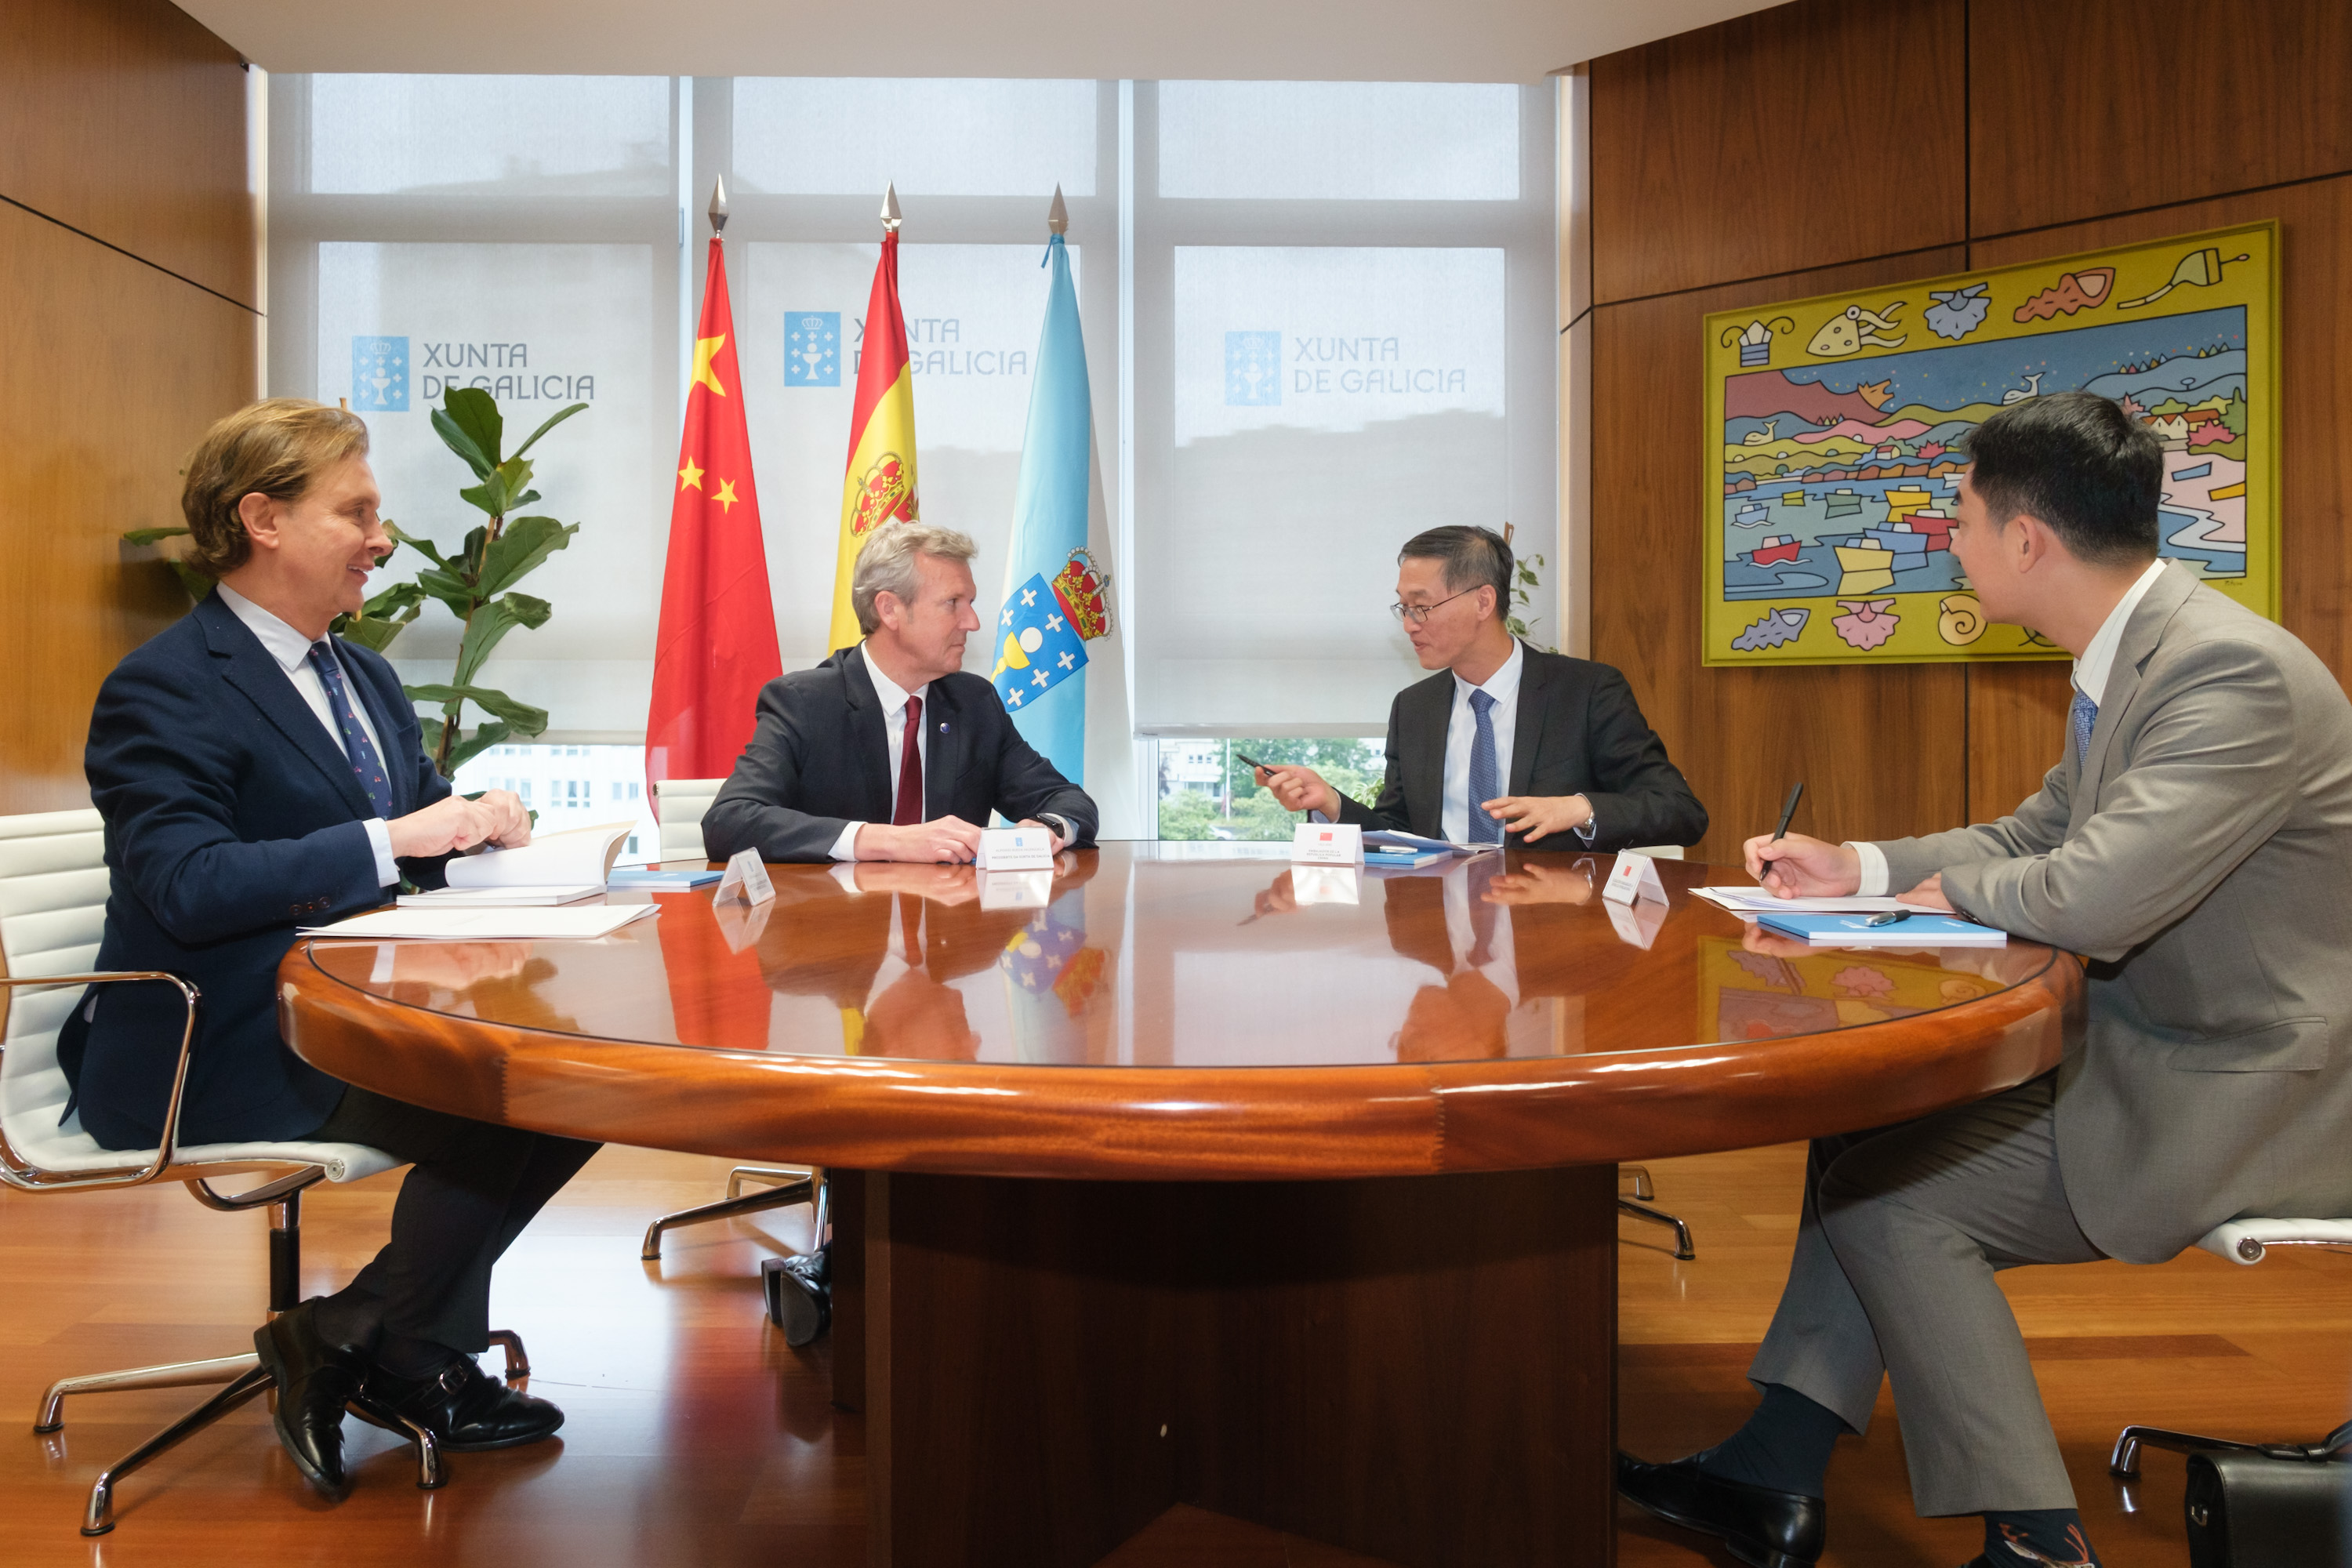 Image 2 of article Rueda avalía co embaixador da China novas oportunidades de negocio para as empresas galegas